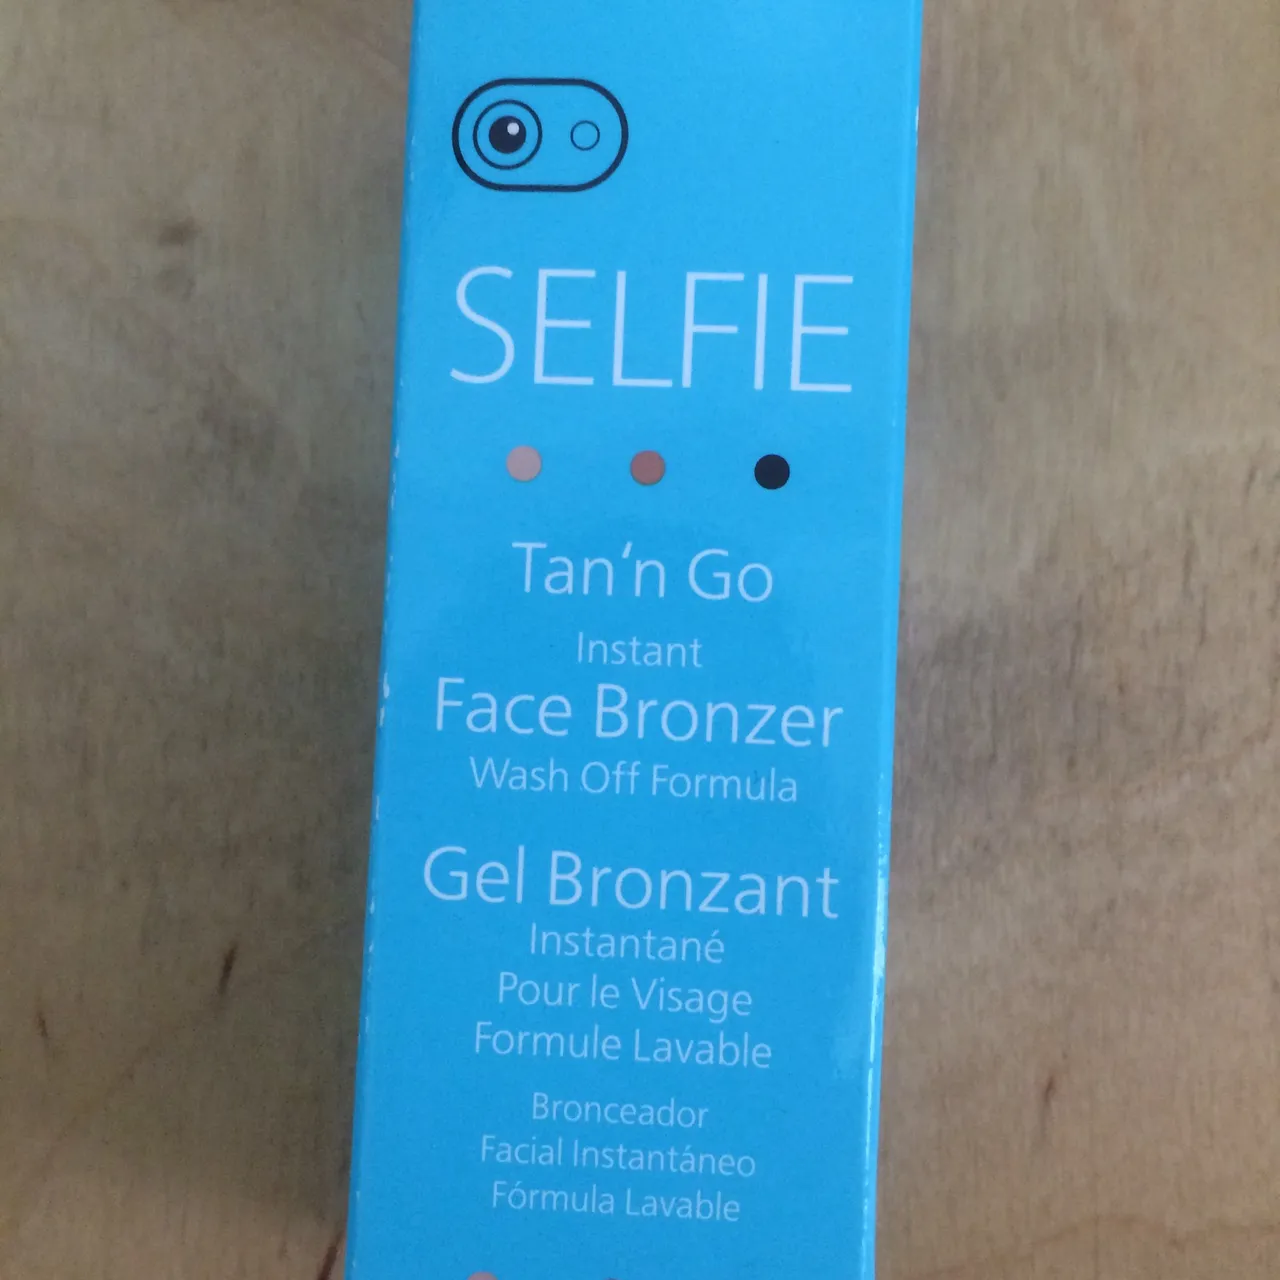 New Selfie Tan 'n Go instant face bronzer 28g 1oz photo 1